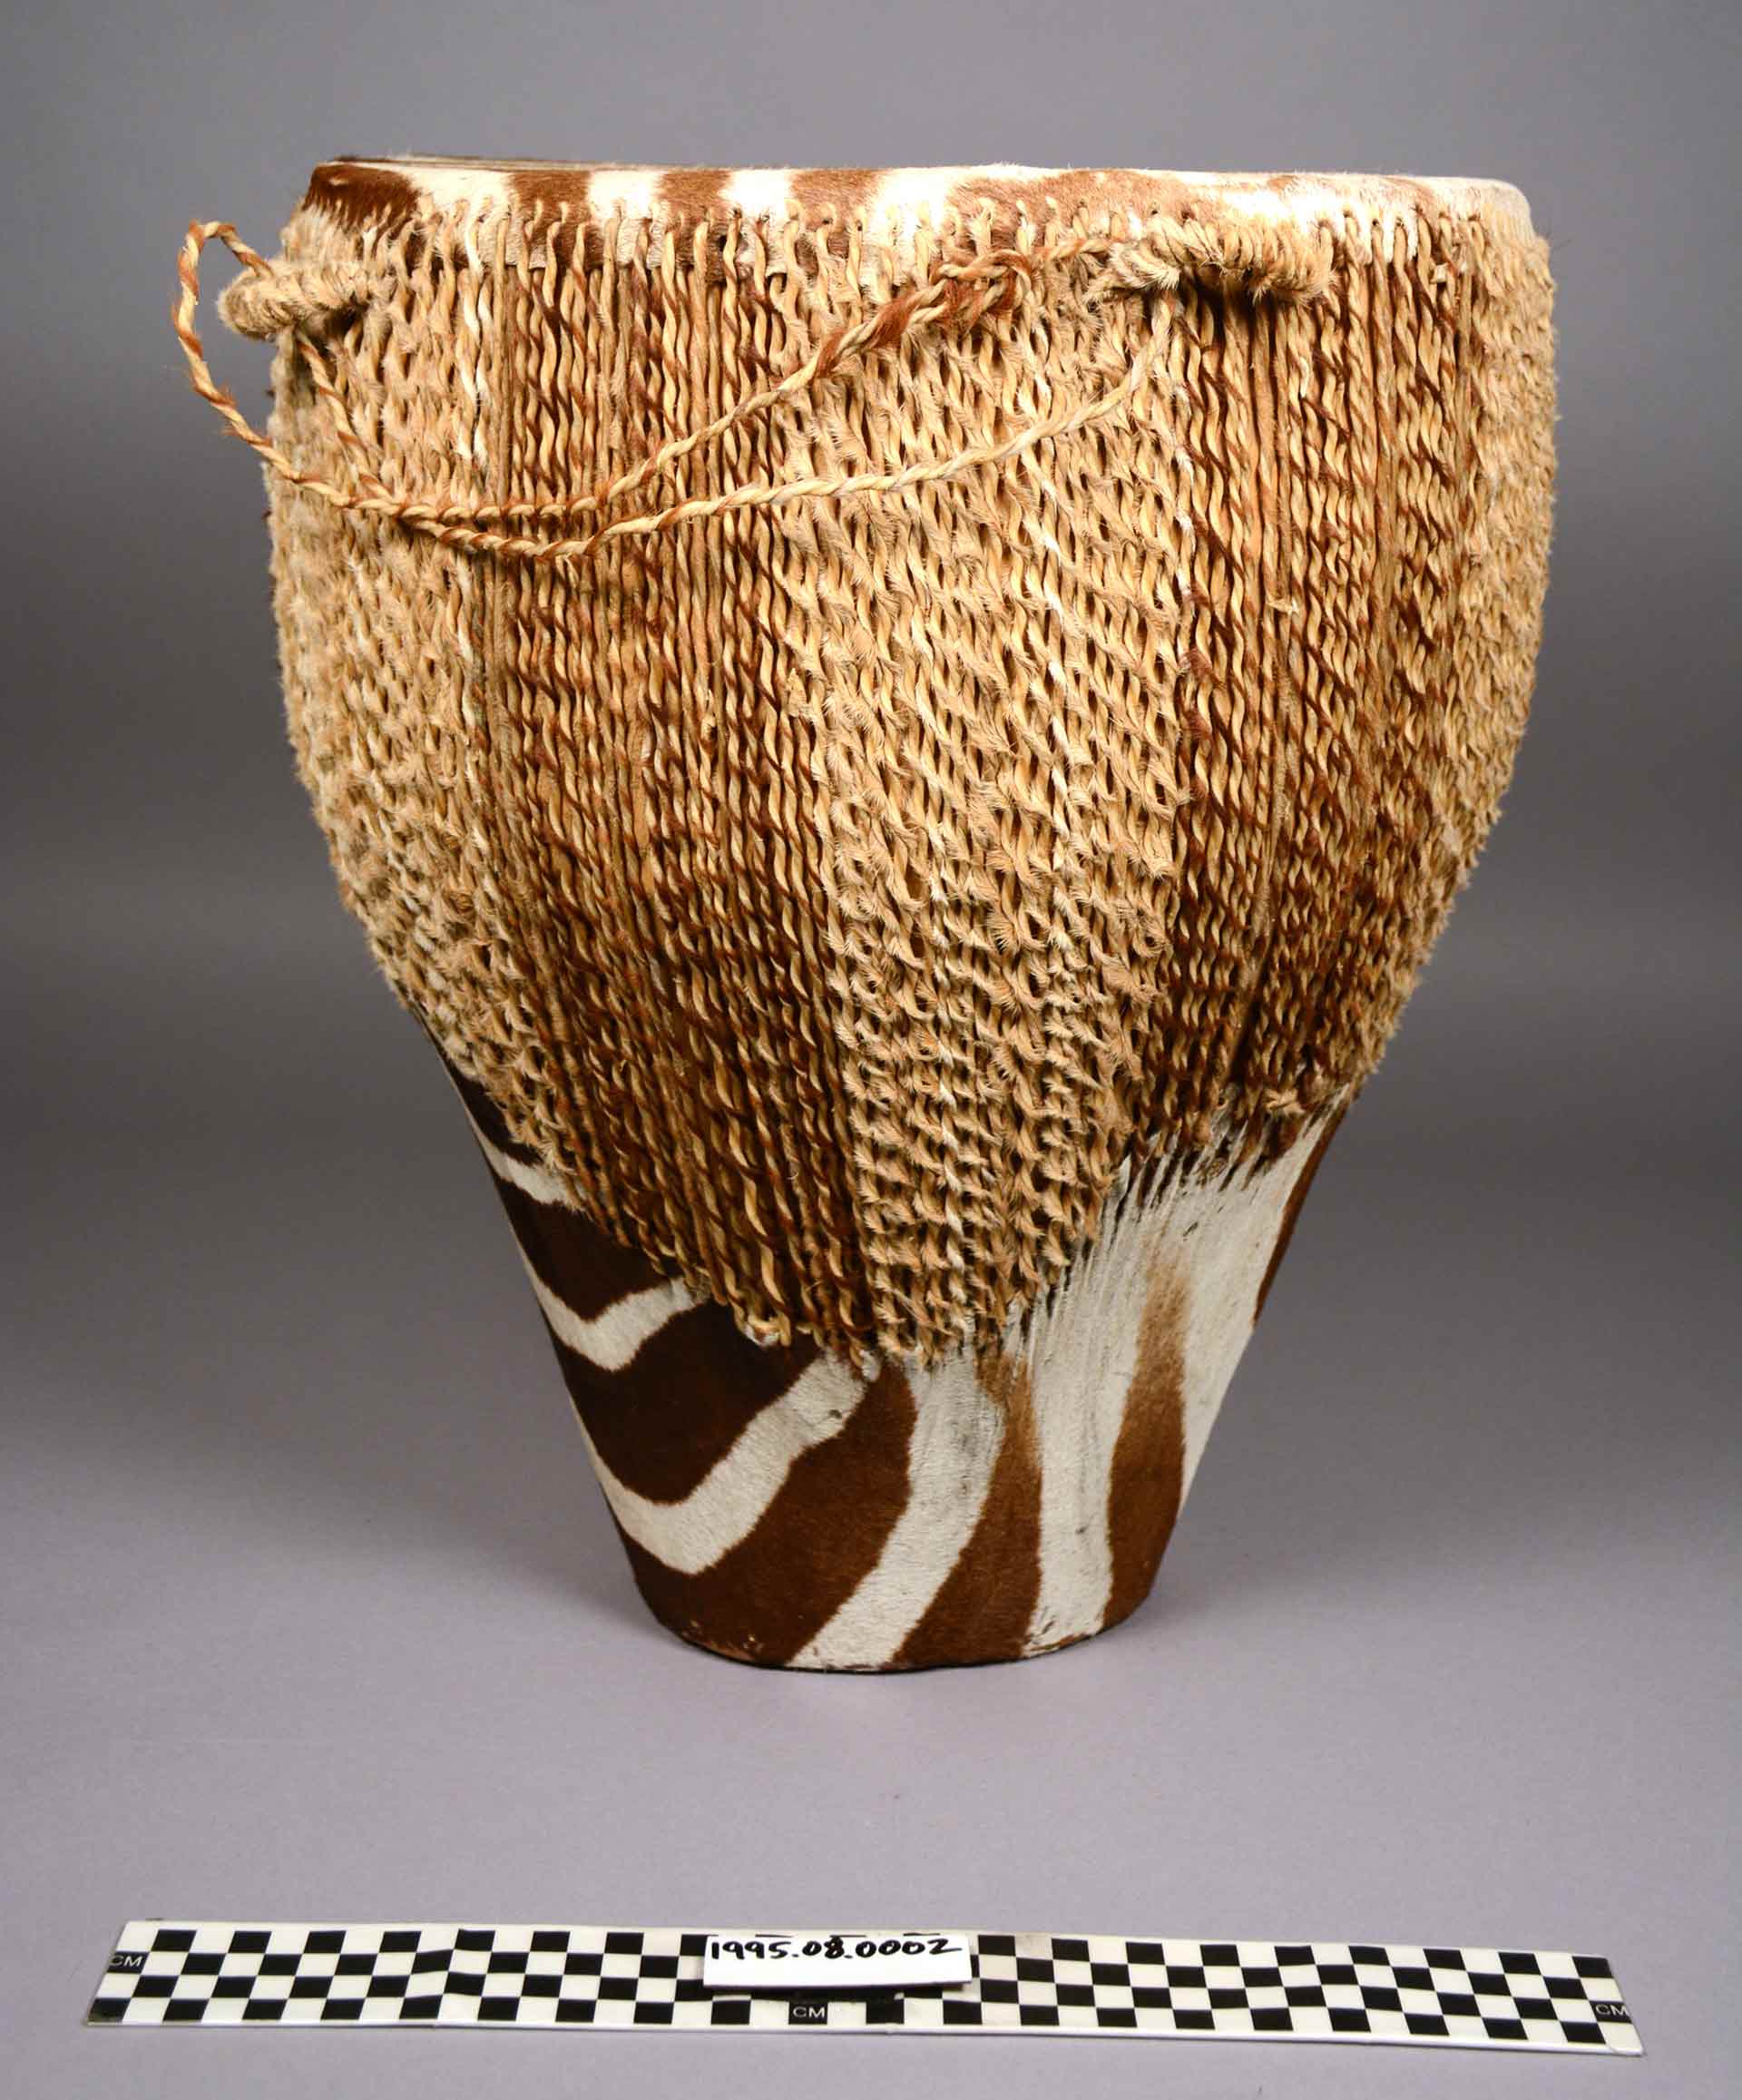 Weaved basket under warm light